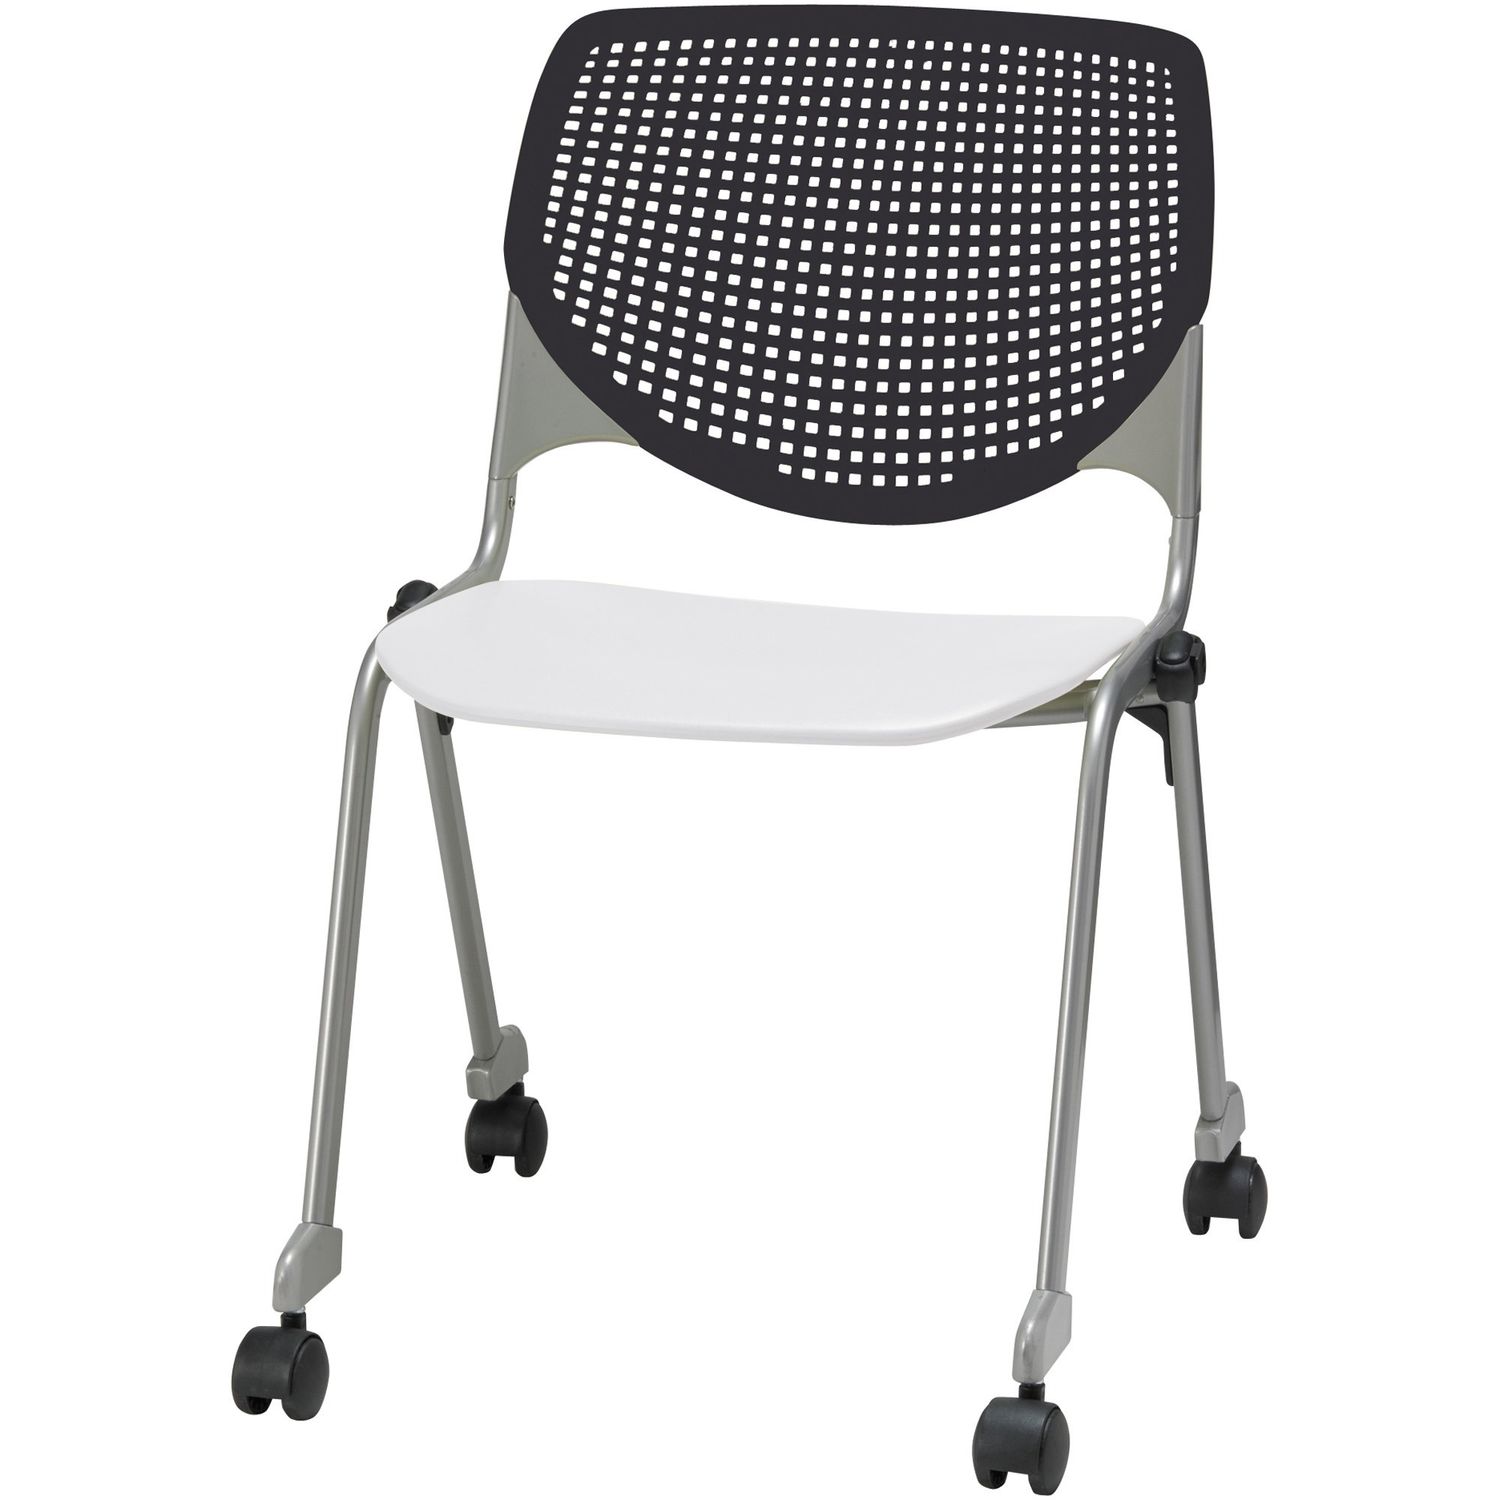 Kool Caster Chair-Perforated Back White Polypropylene Seat, Black Polypropylene, Aluminum Alloy Back, Powder Coated Silver Tubular Steel Frame, 1 Each